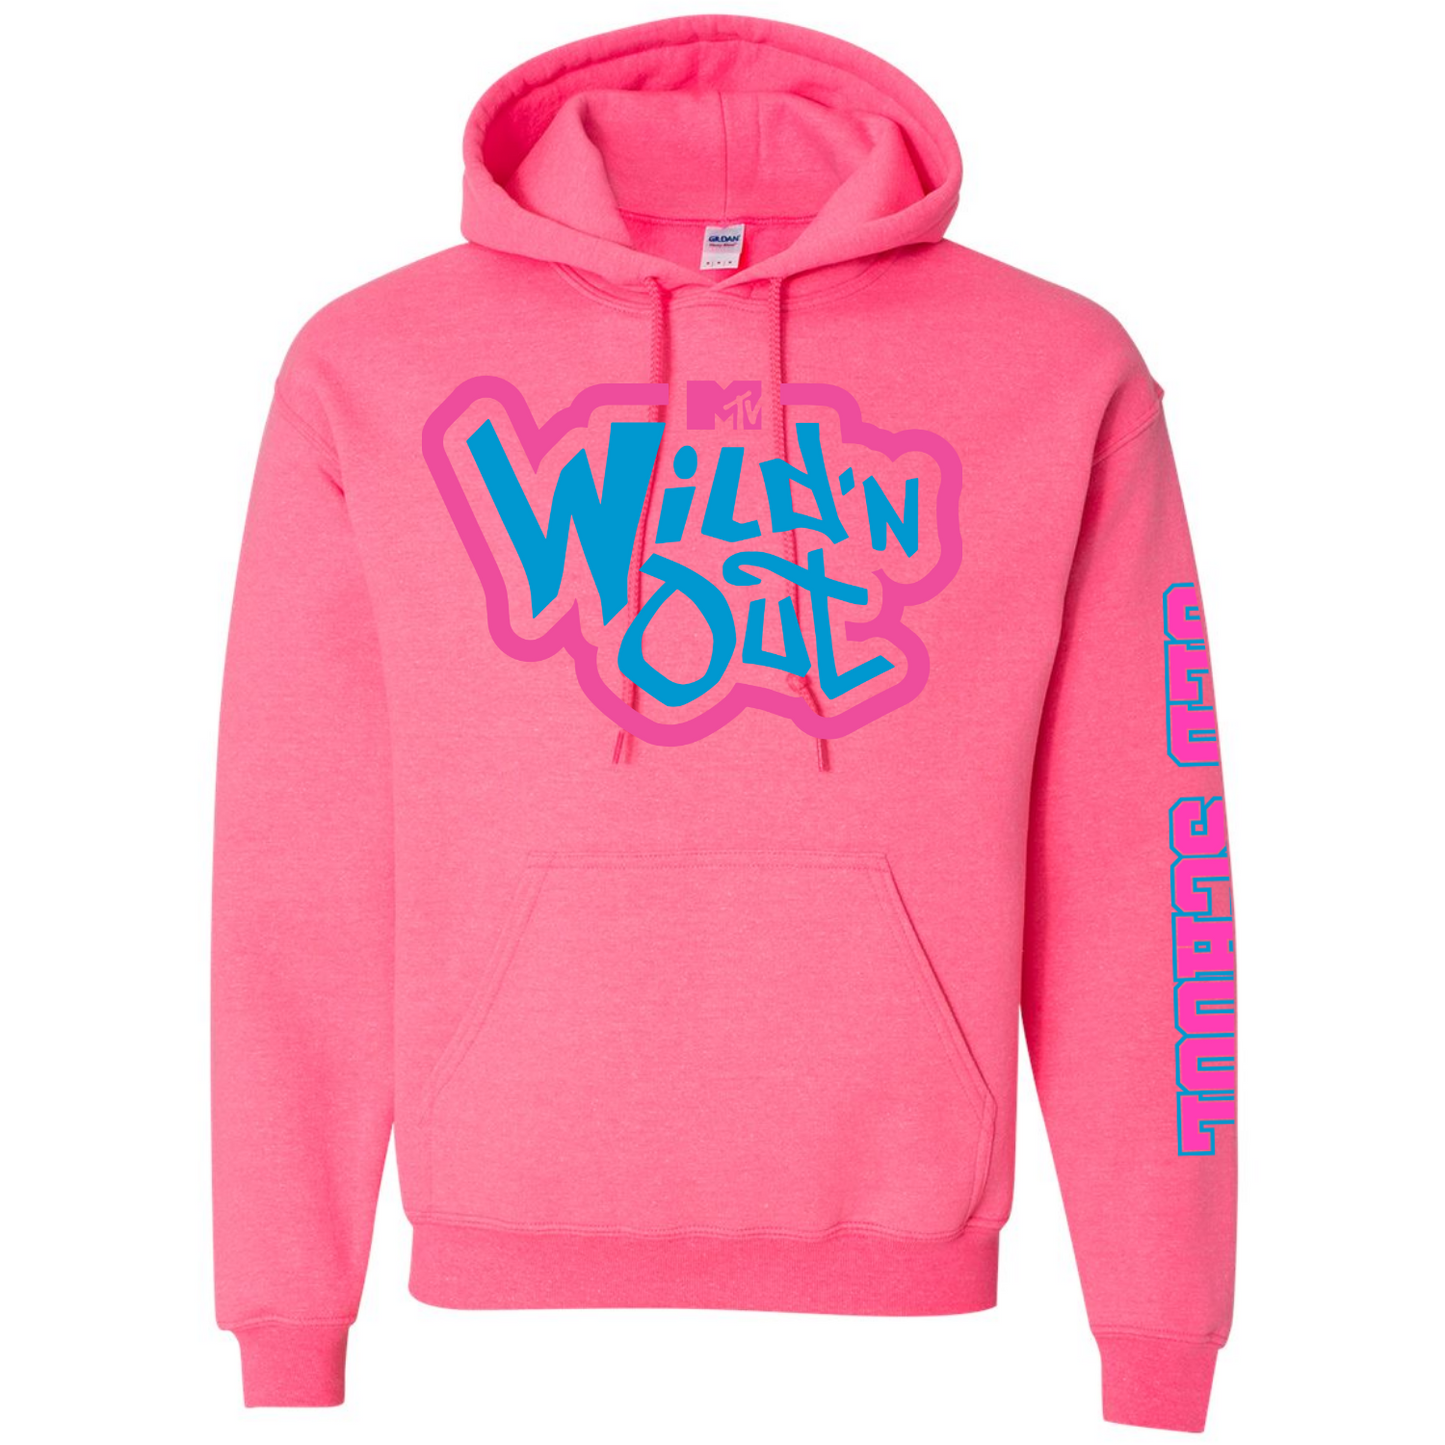 Wild 'N Out Neon Rosa Old School Sweatshirt mit Kapuze